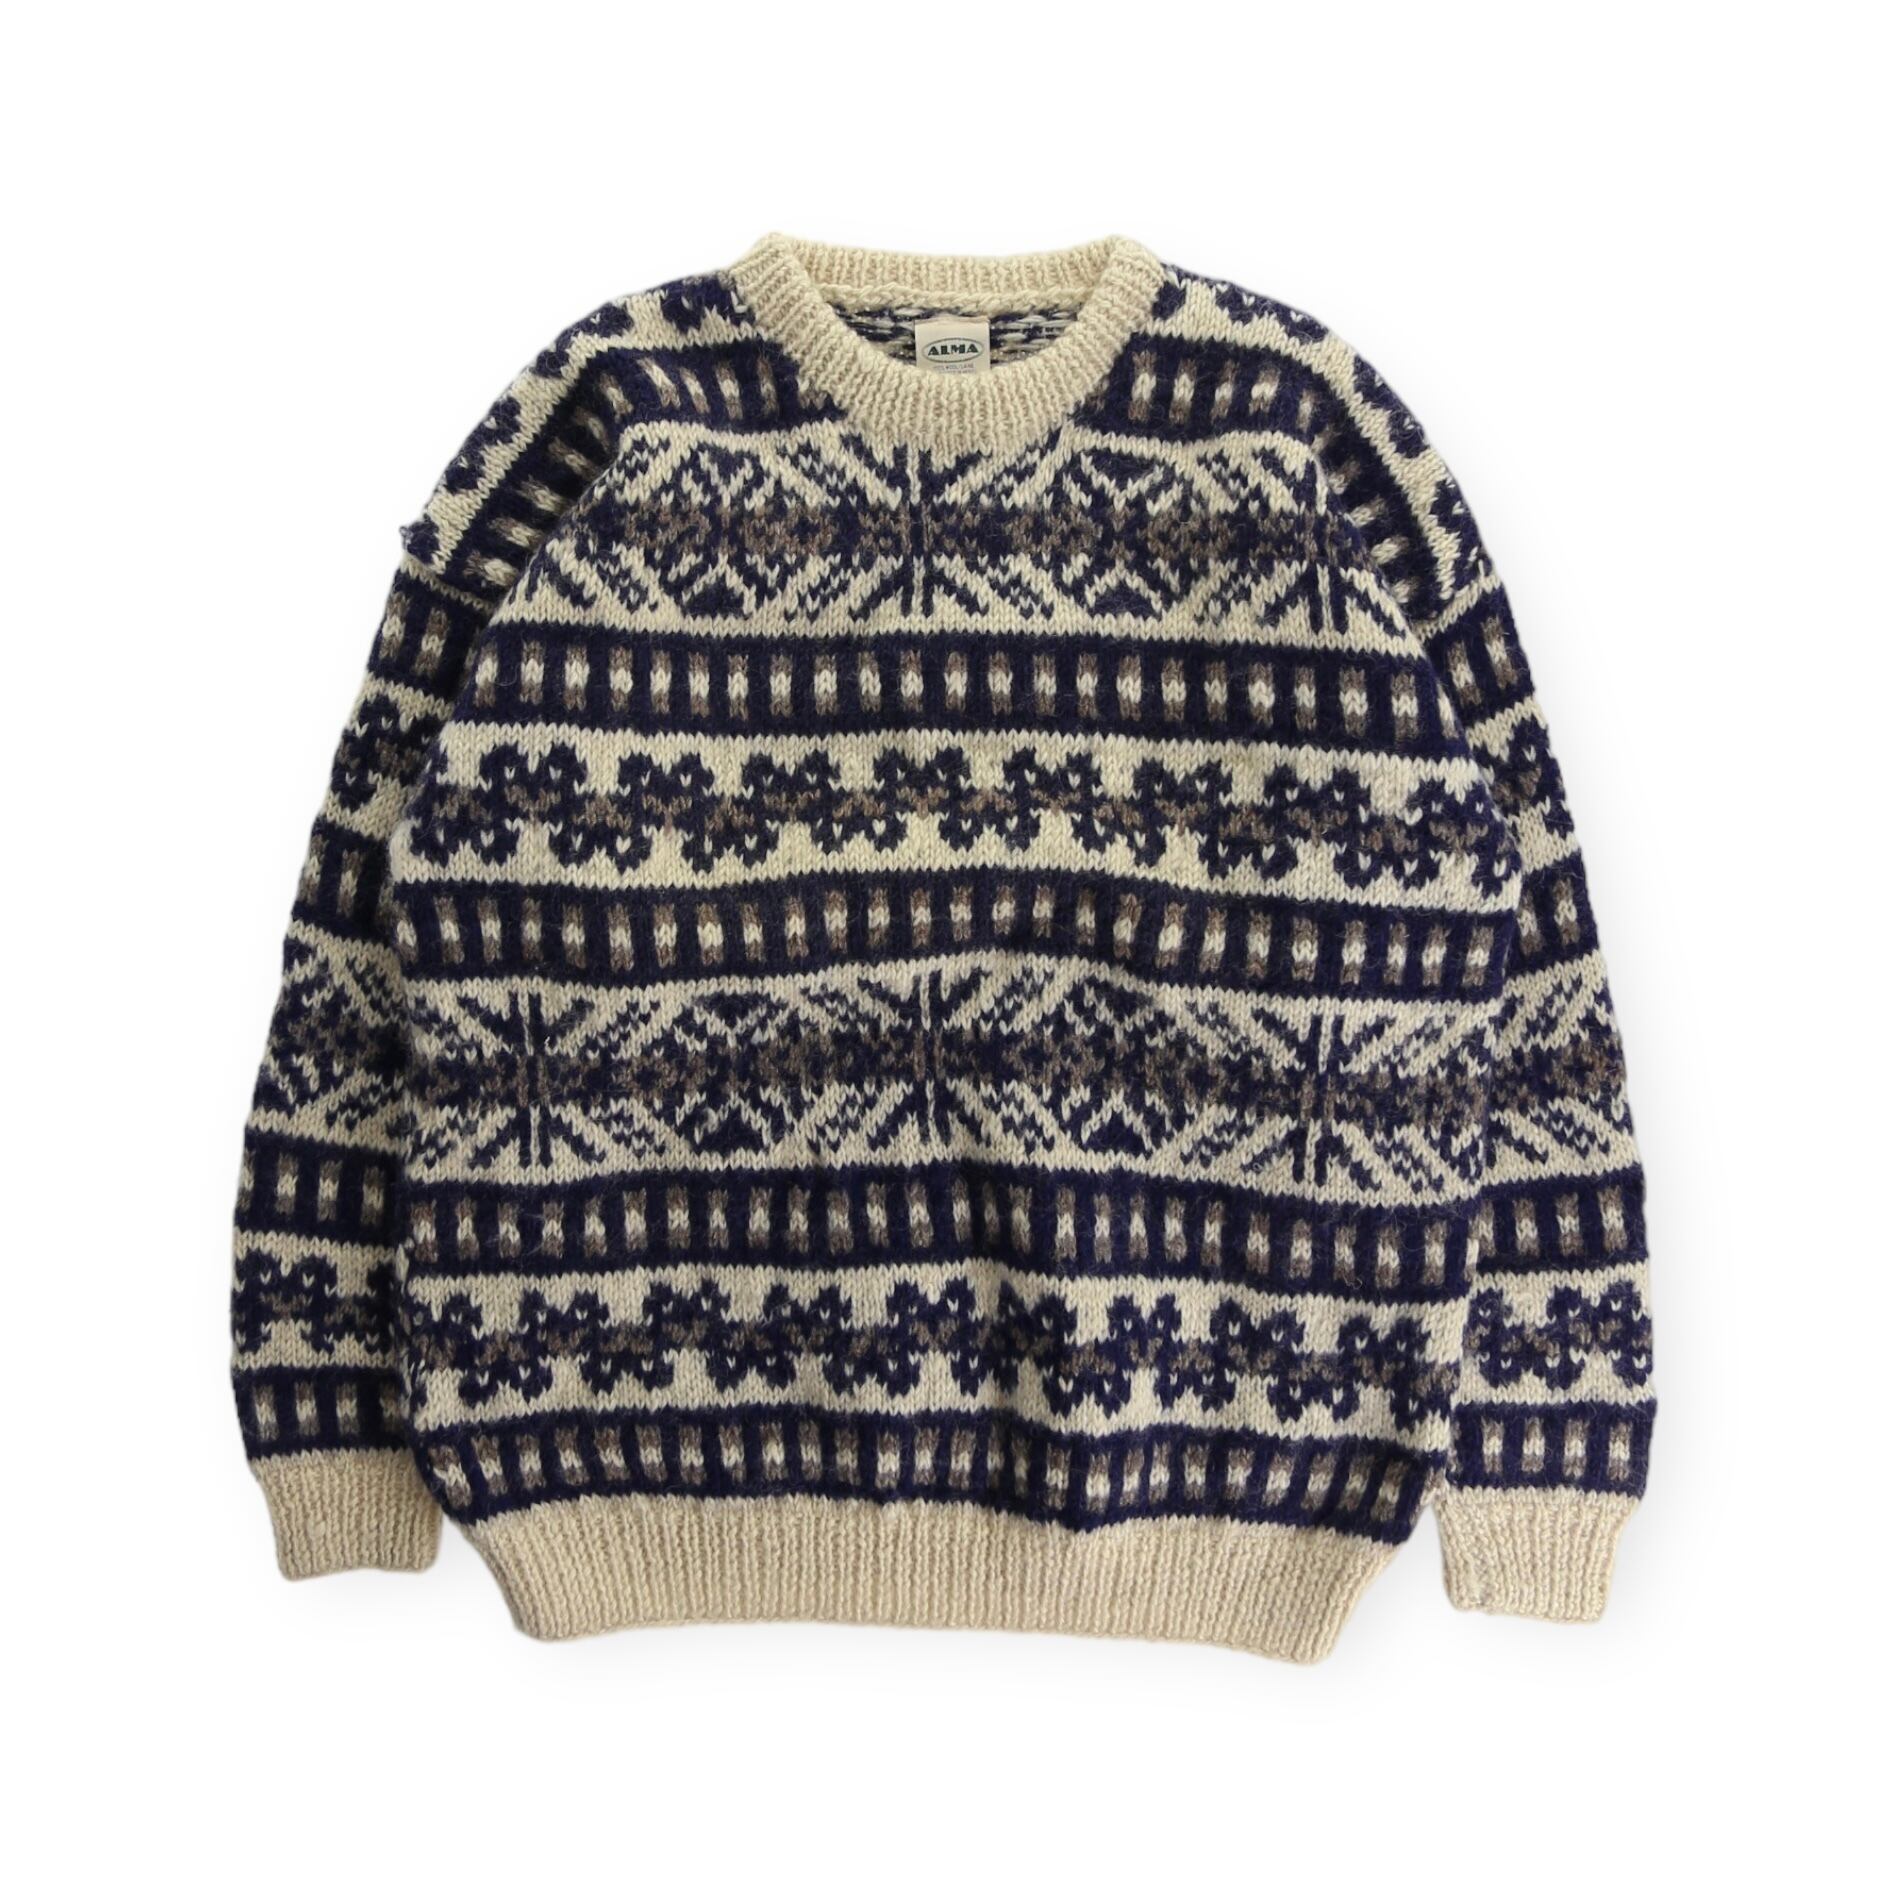 Nordic pattern hand knit sweater